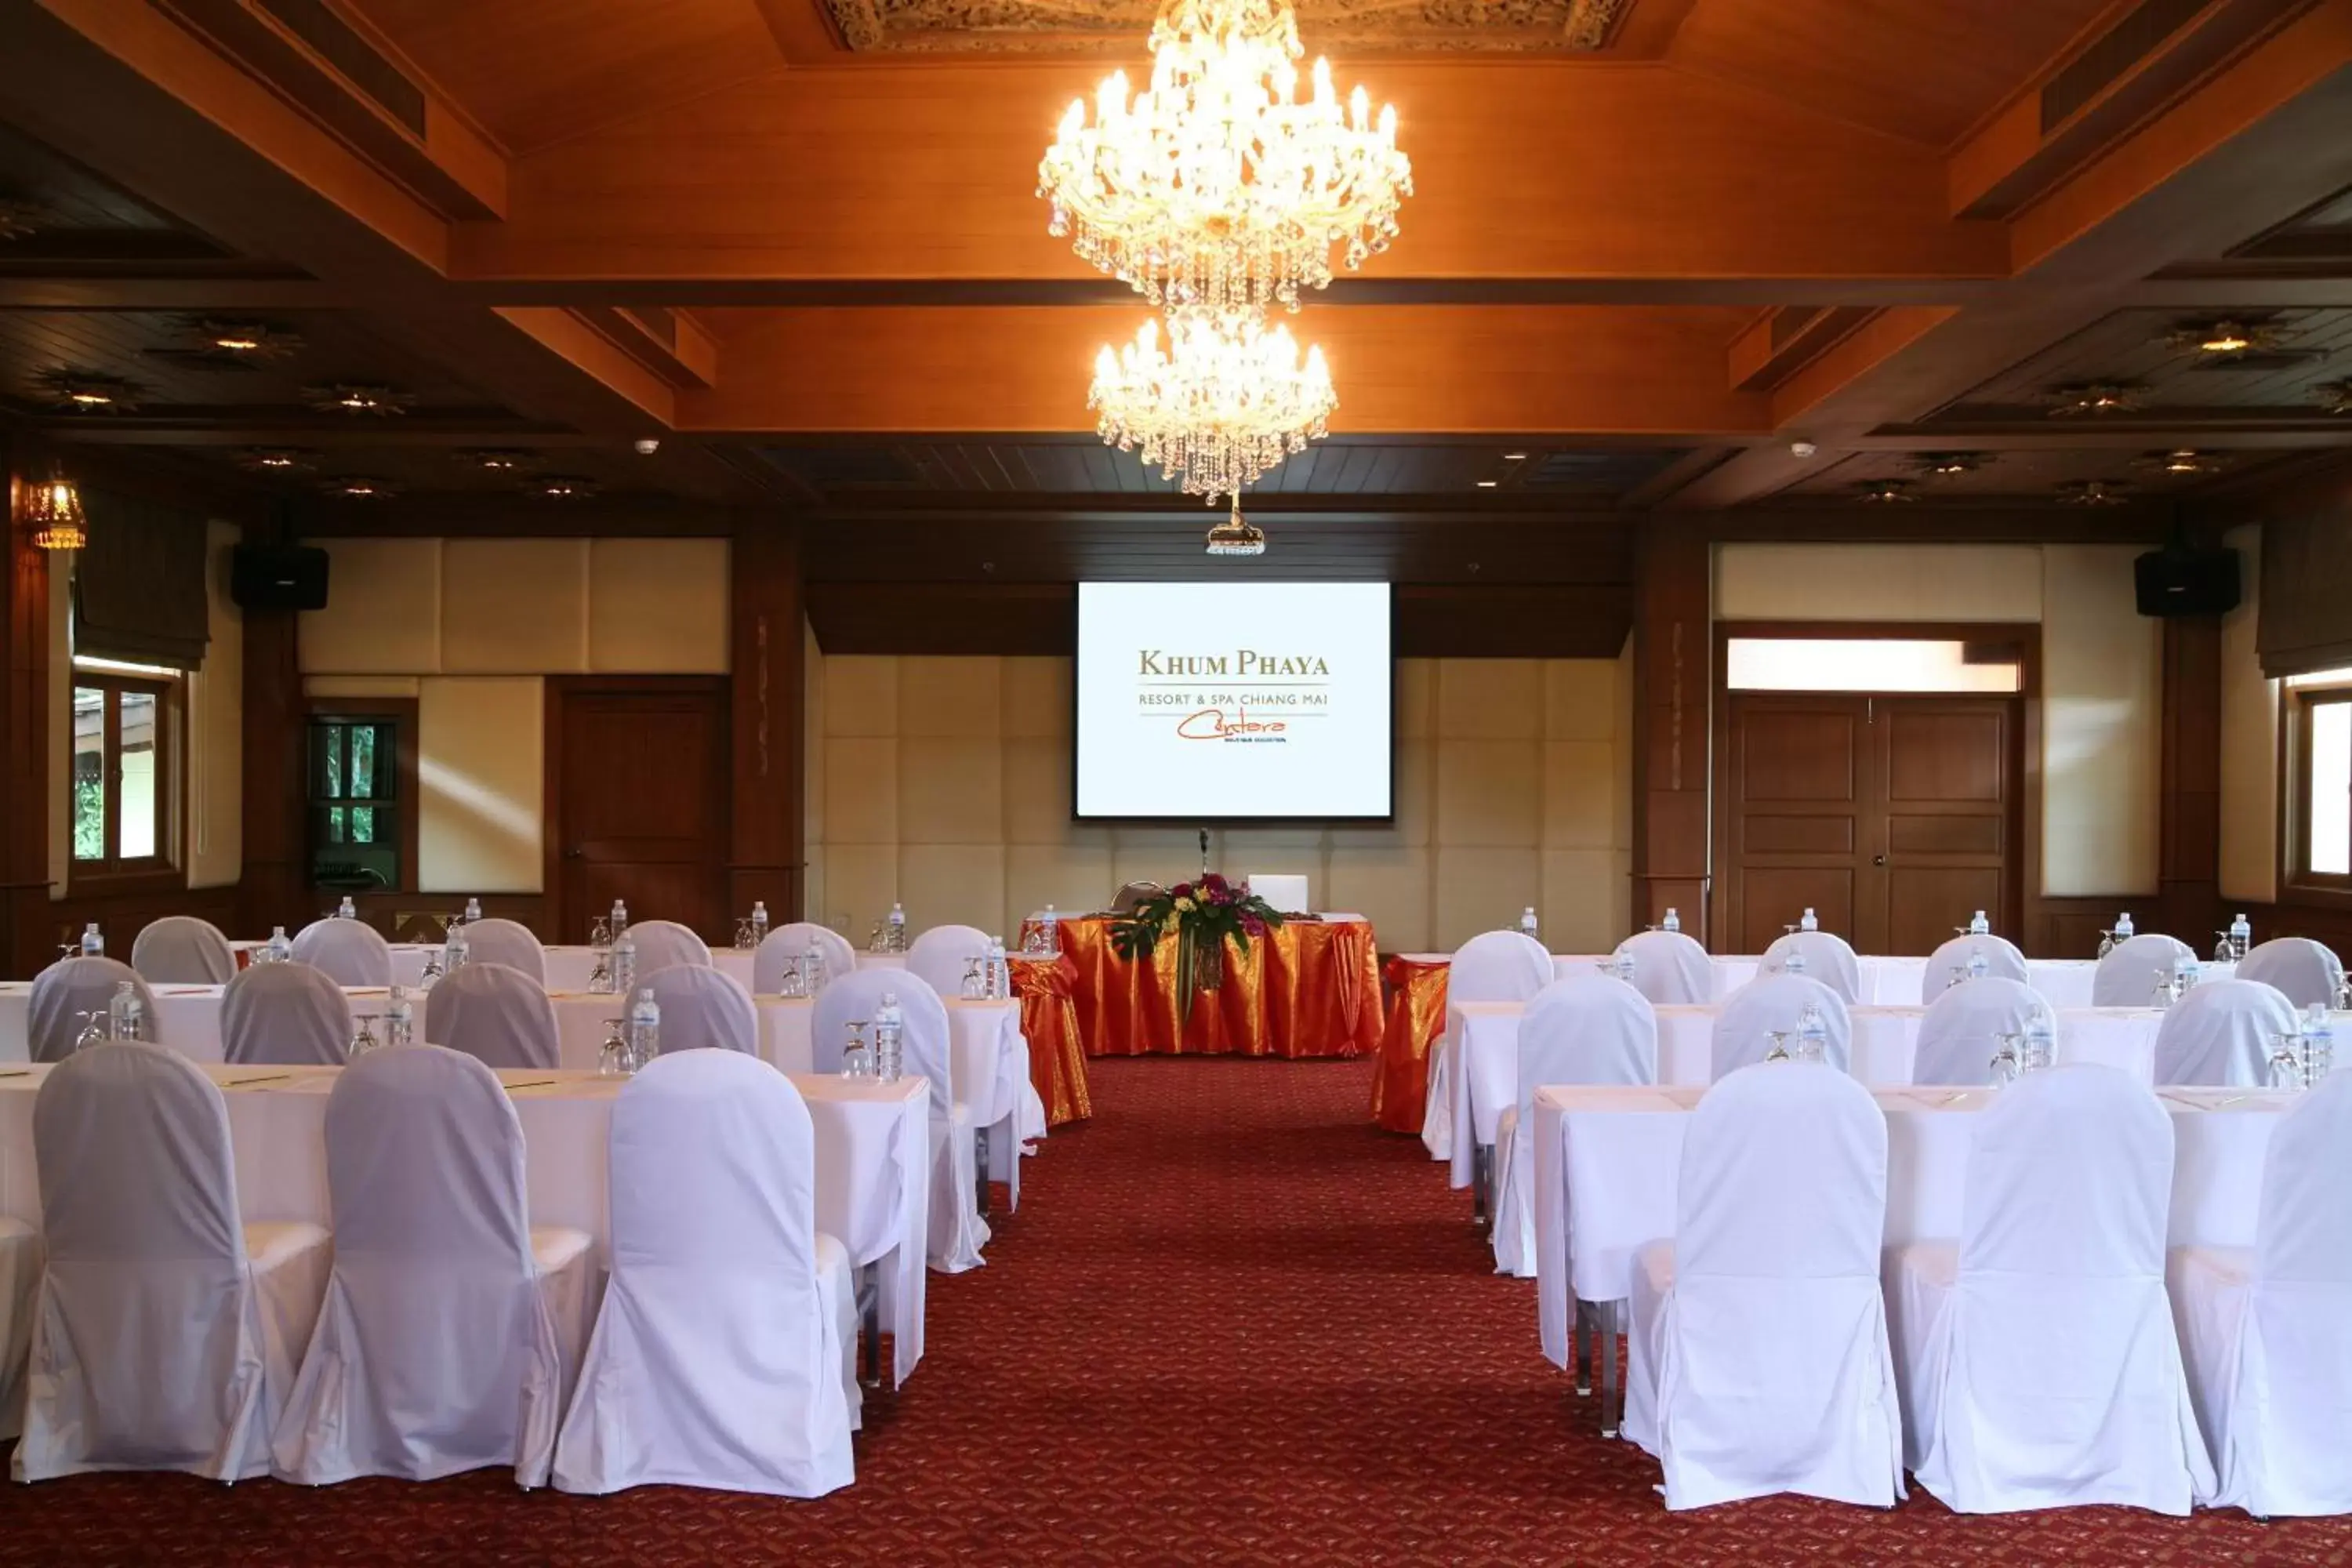 Meeting/conference room, Banquet Facilities in Centara Khum Phaya Resort & Spa, Centara Boutique Collection